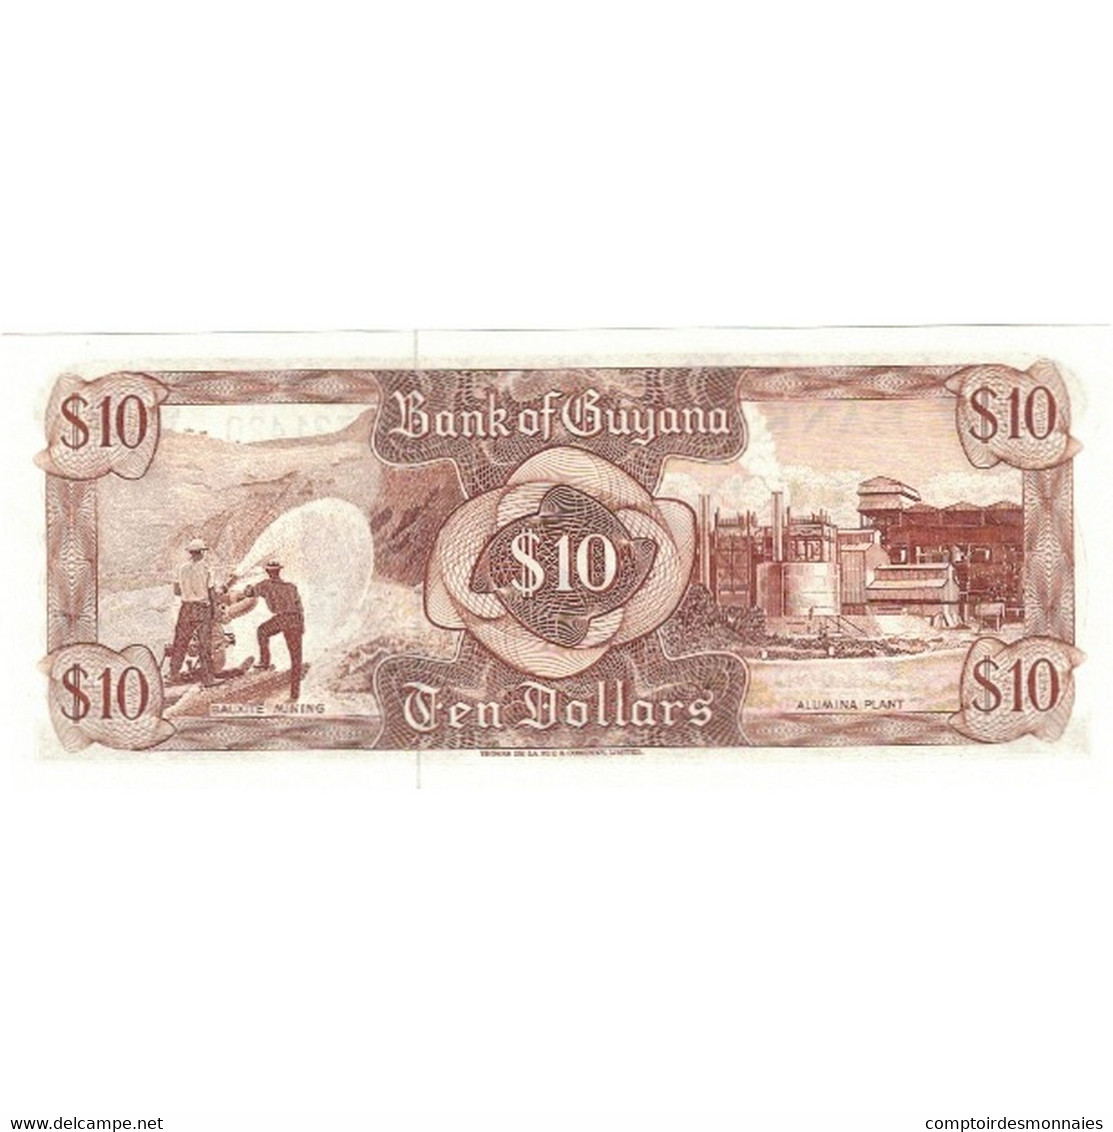 Billet, Guyana, 10 Dollars, Undated (1996), KM:23d, NEUF - Guyana